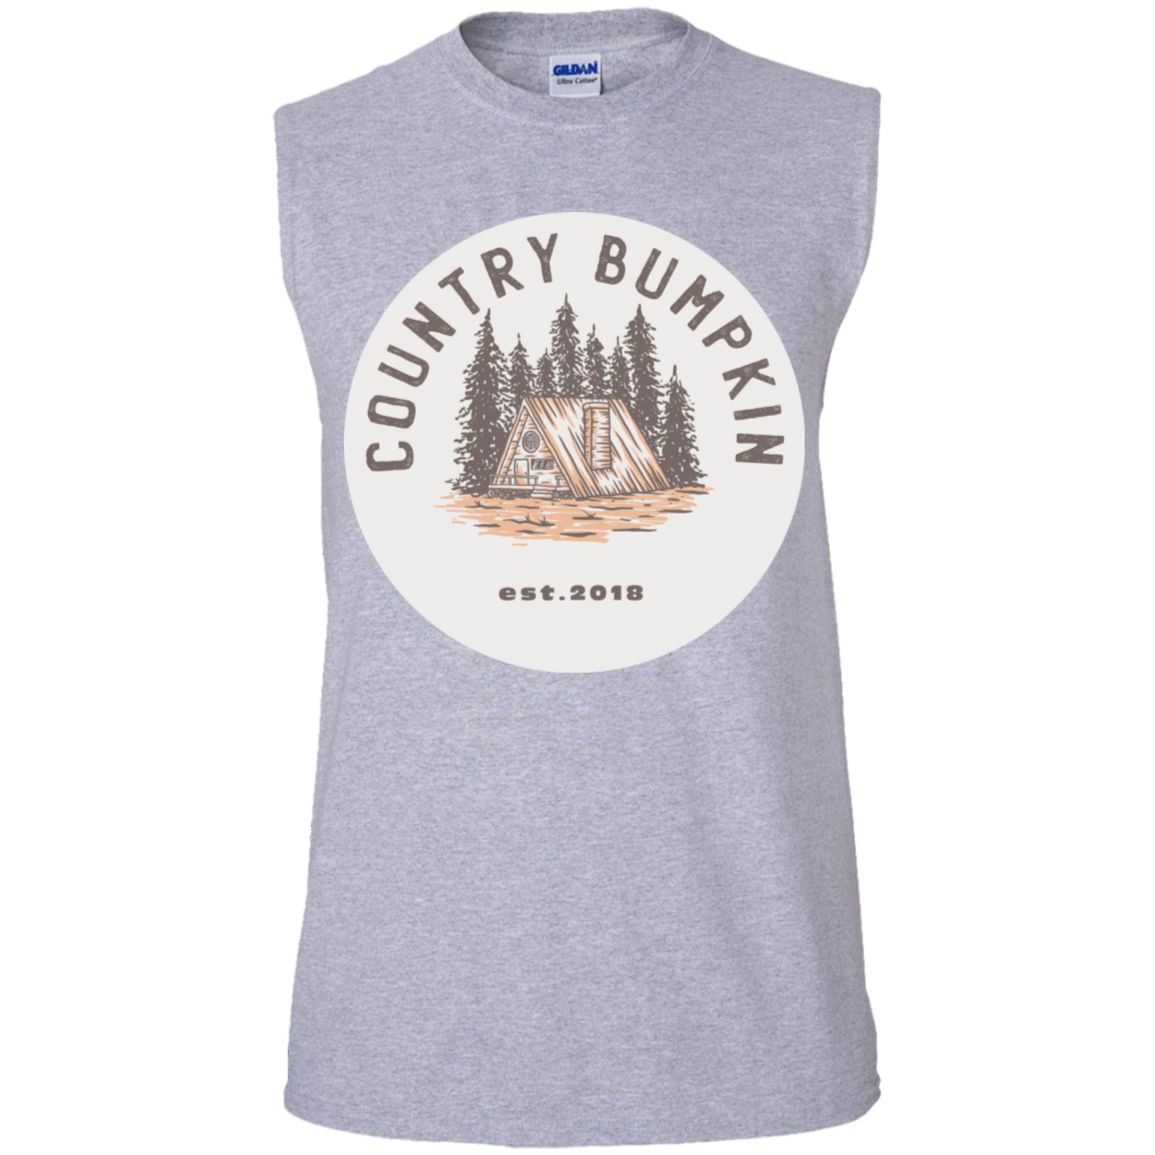 "Country Bumpkin" Cottage Est 2018 muscle shirt